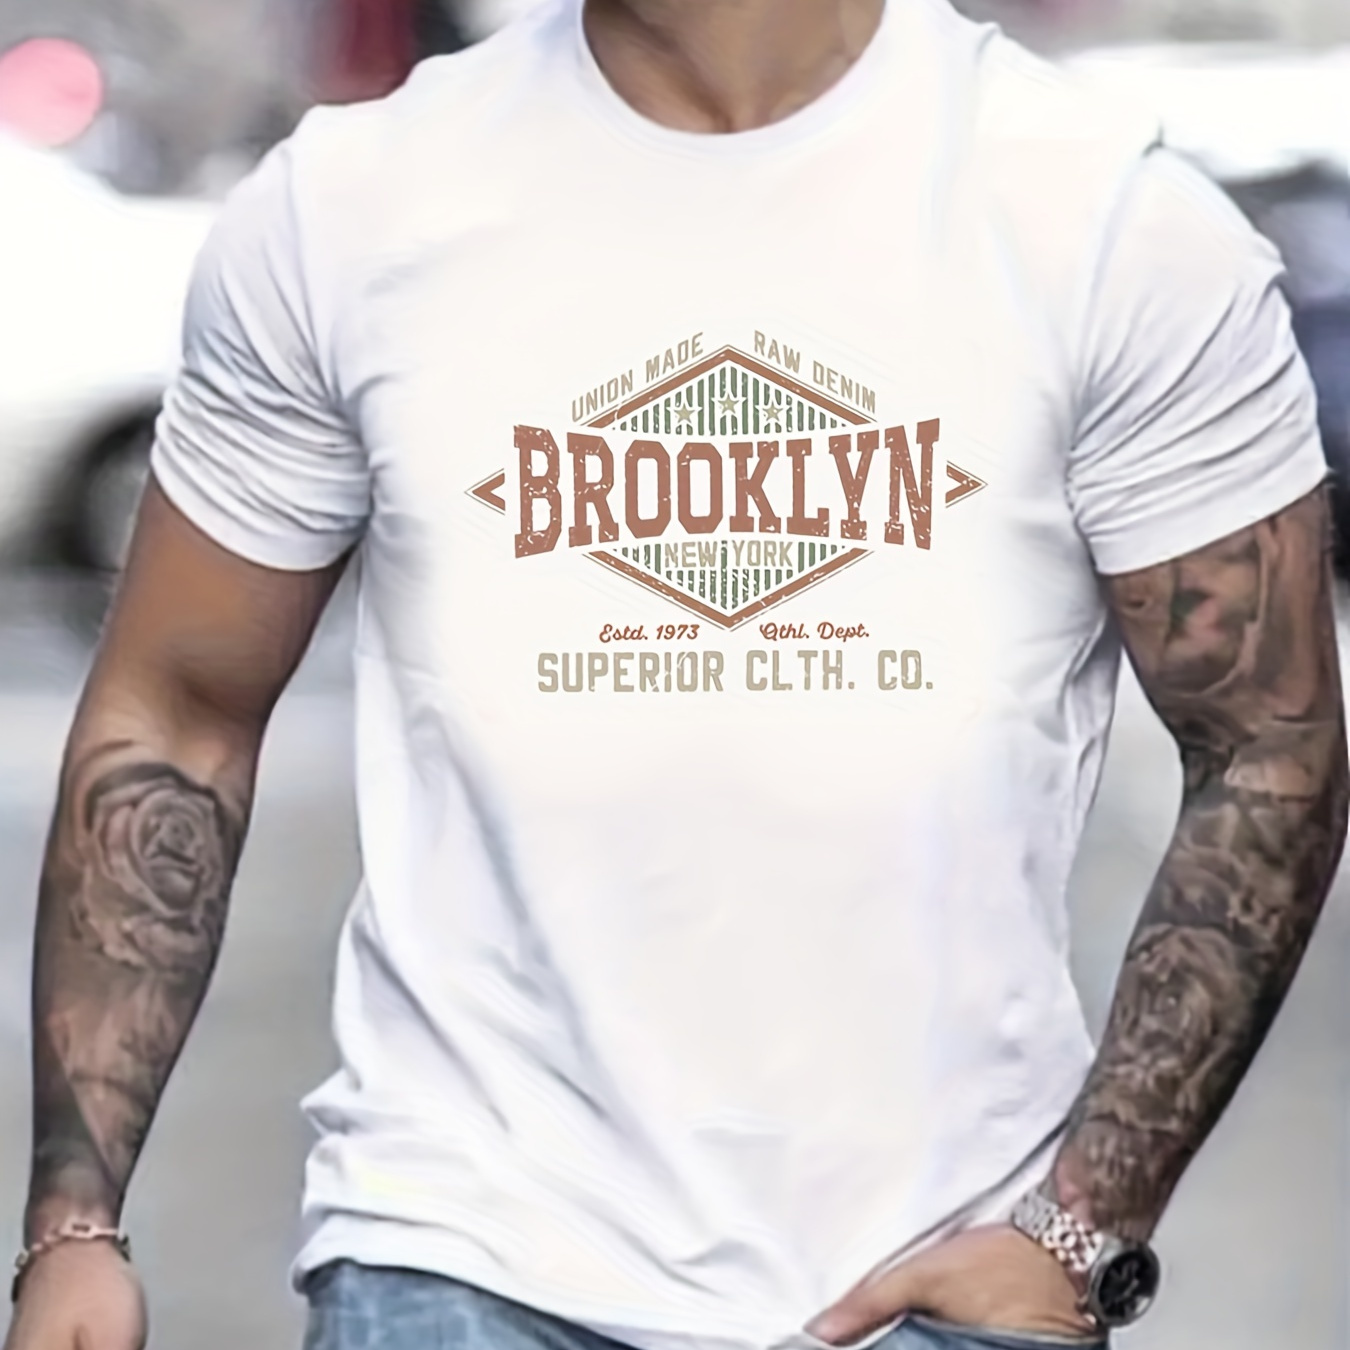 

brooklyn" Pattern Print Men's Comfy T-shirt, Graphic Tee Men's Summer Clothes, Men's Outfits